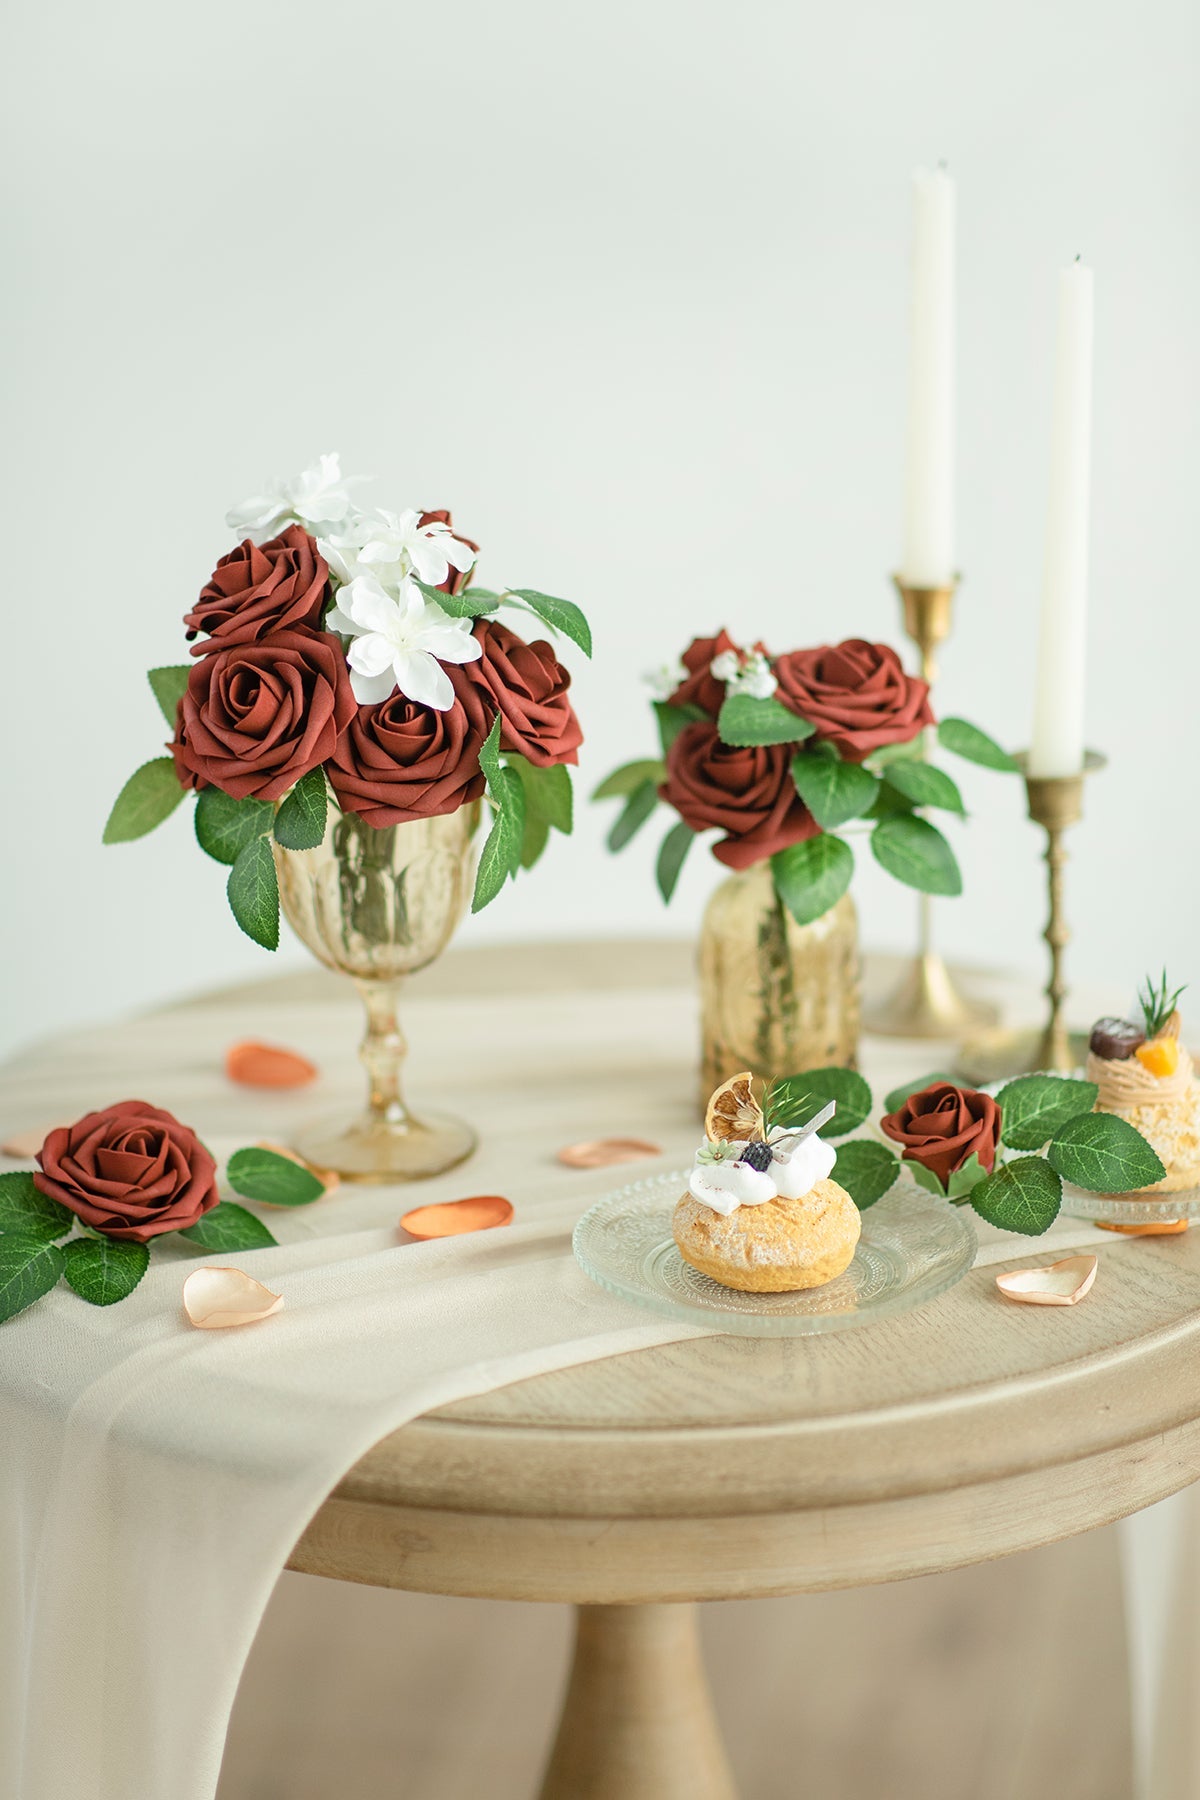 DIY Supporting Flower Boxes in Black & Pumpkin Orange Wedding